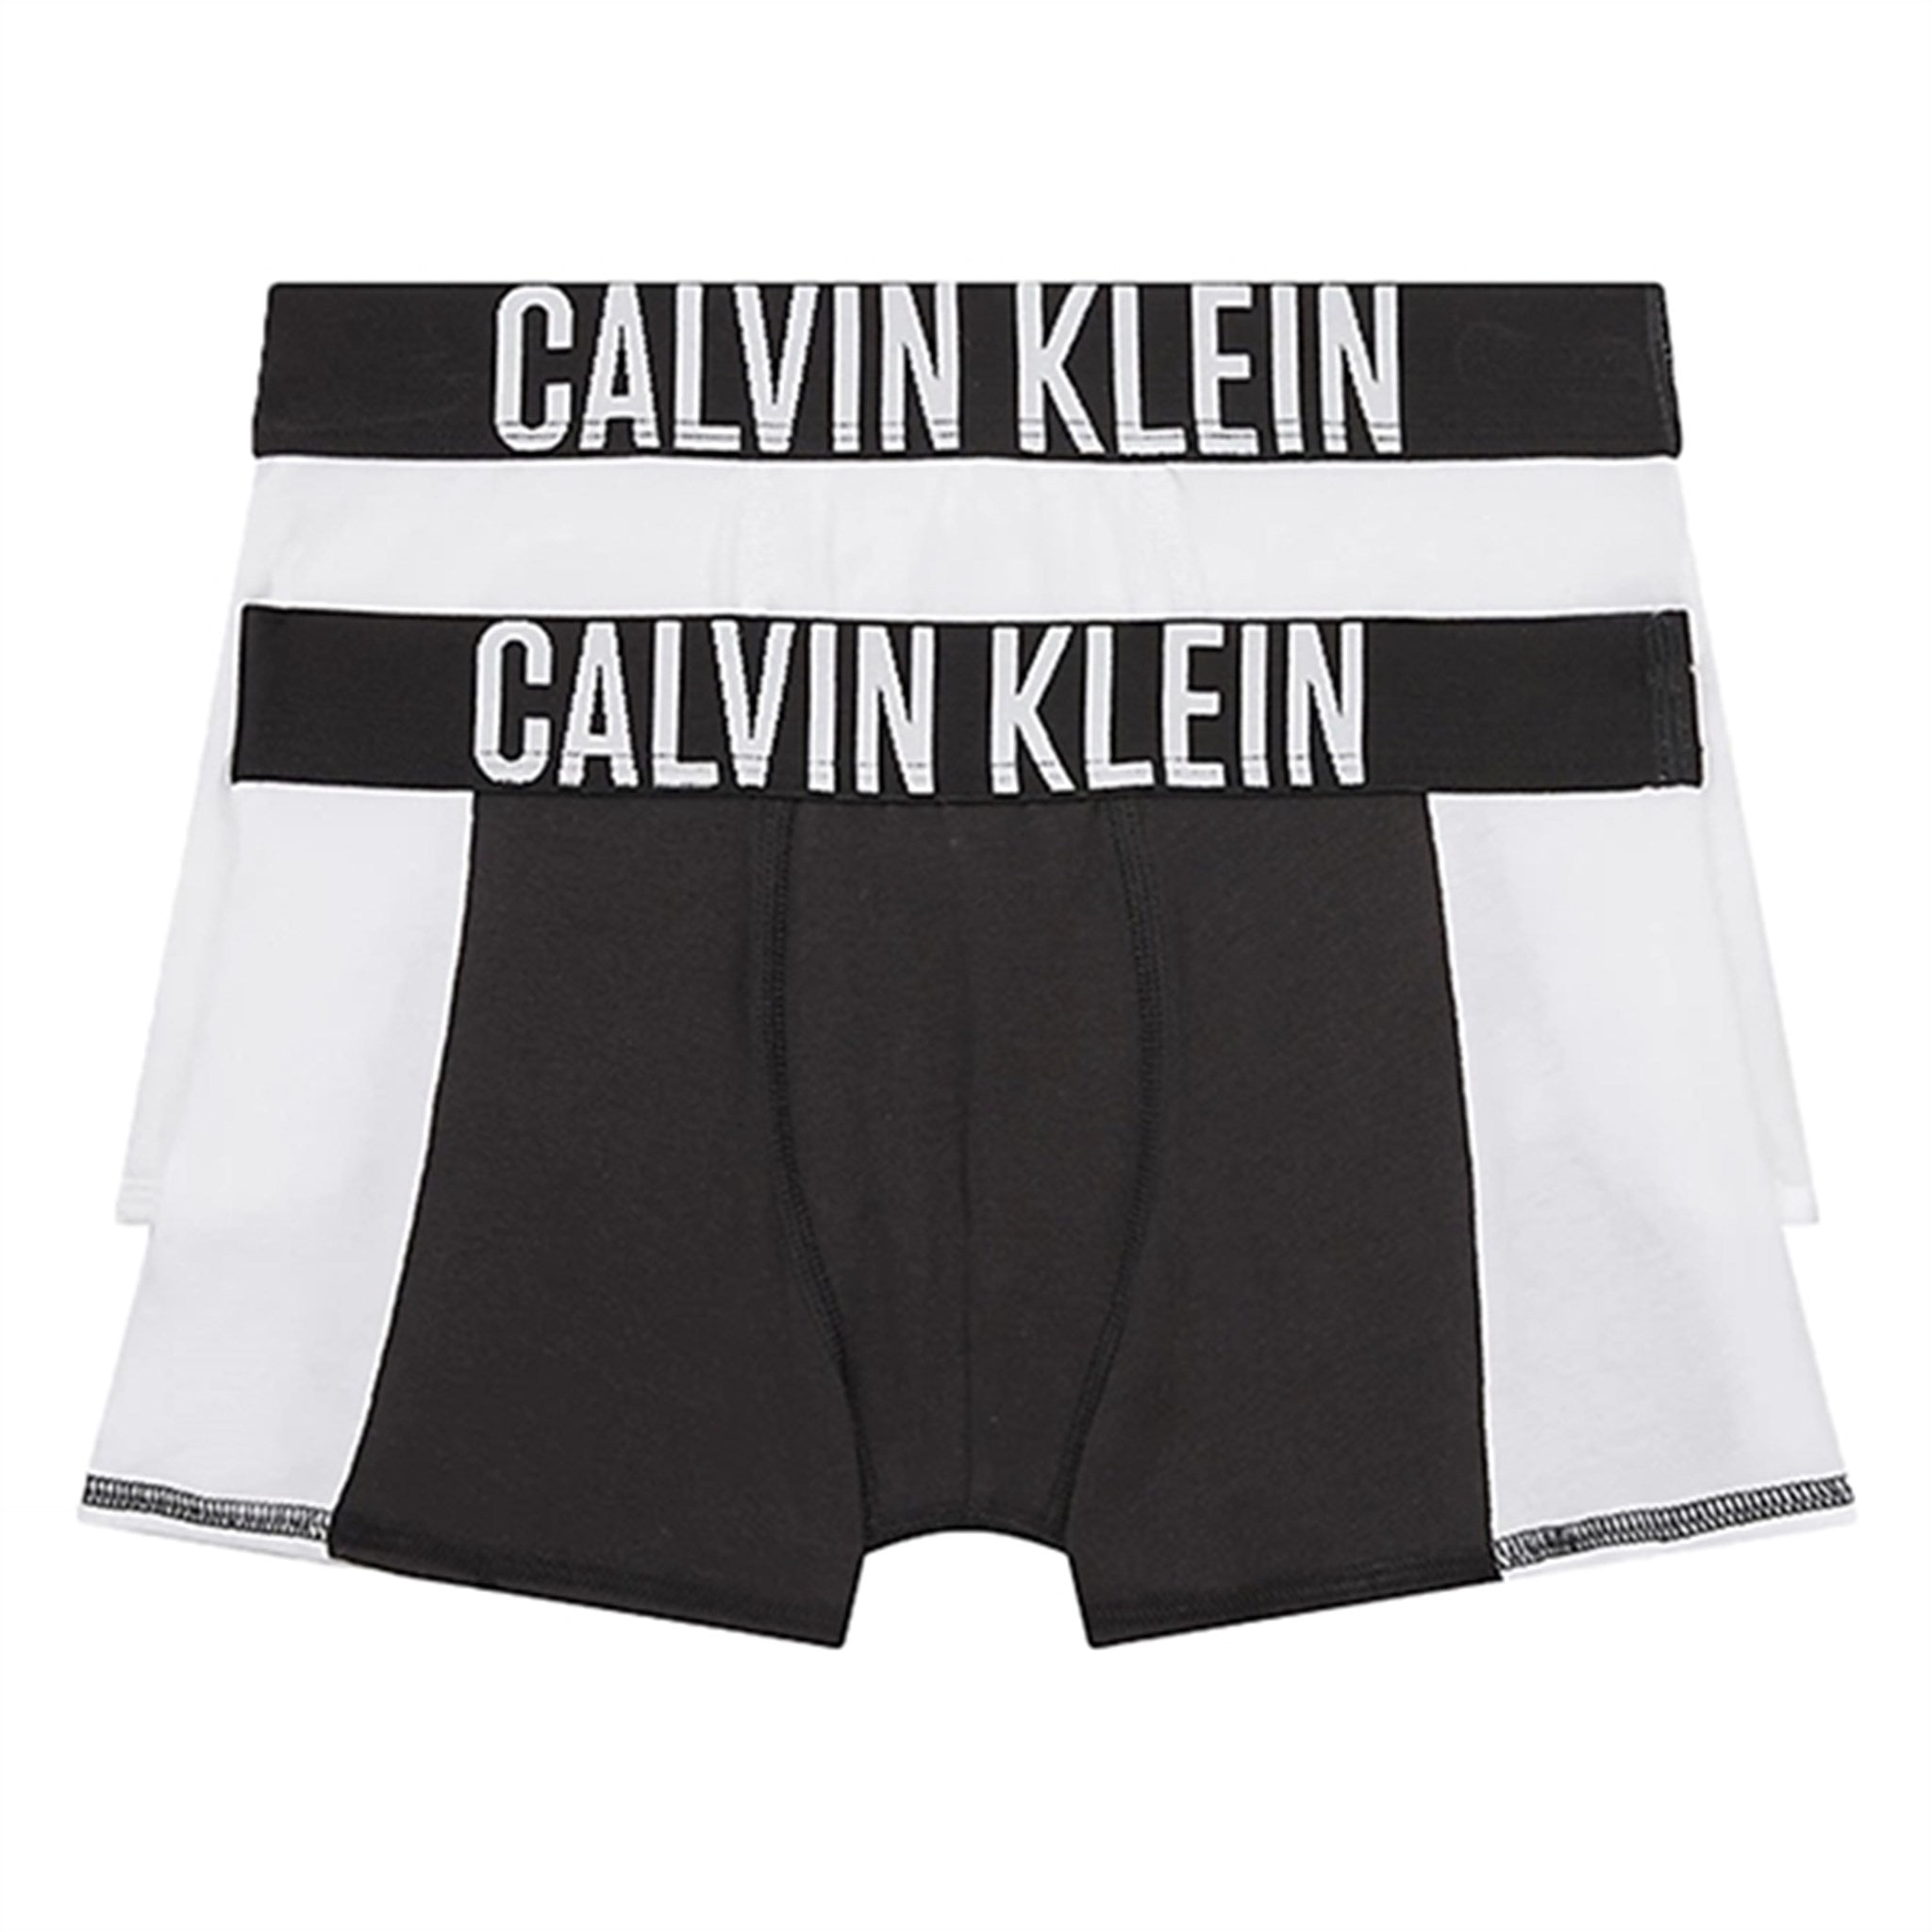 Calvin Klein Boxershorts 2-Pak Black/White